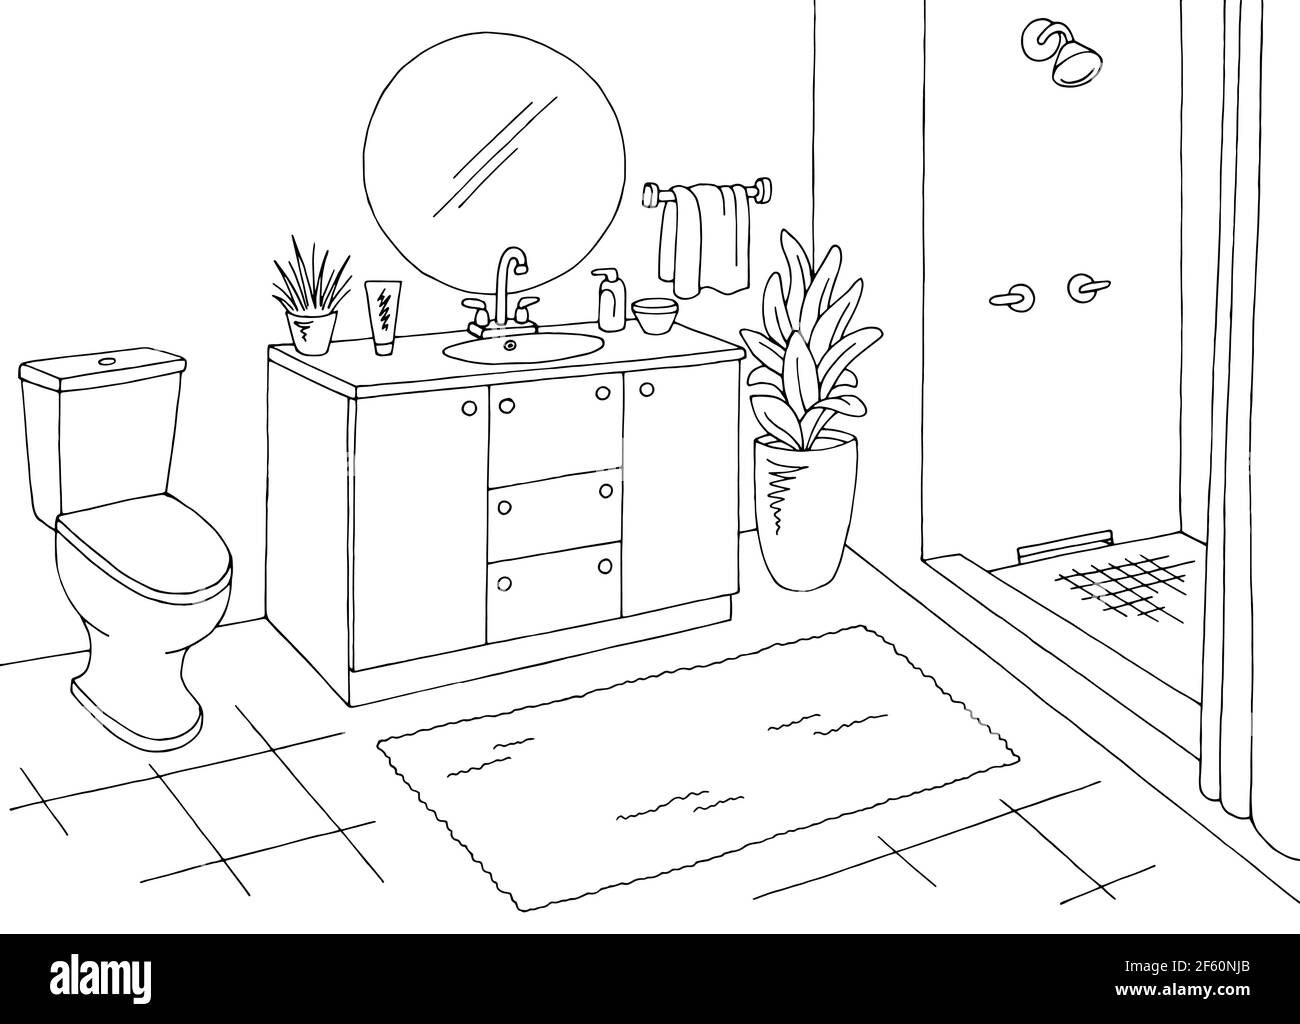 Bathroom graphic home interior black white sketch illustration vector ...